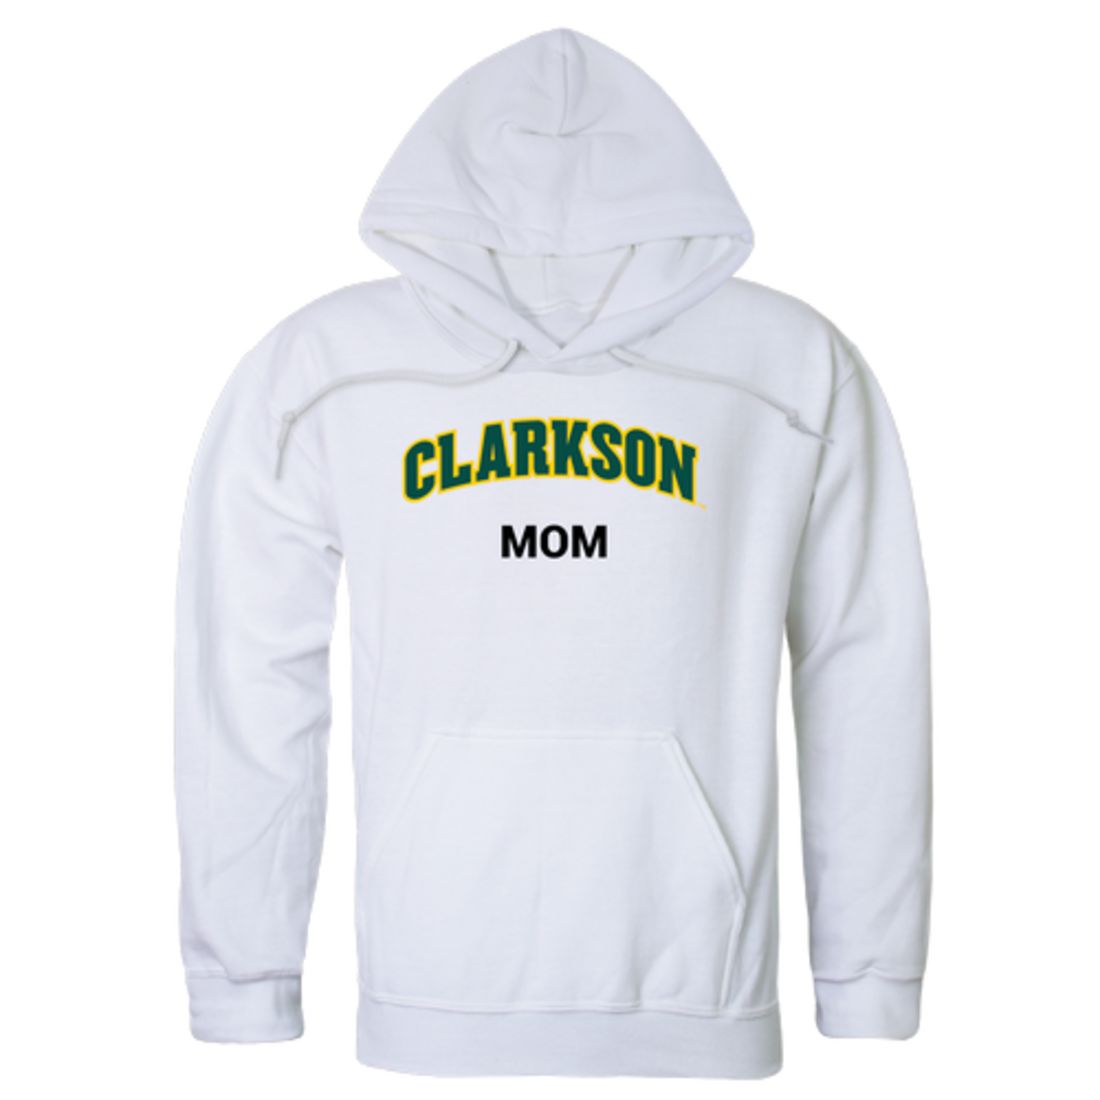 Clarkson University Golden Knights Mom Fleece Hoodie Sweatshirts Forest-Campus-Wardrobe